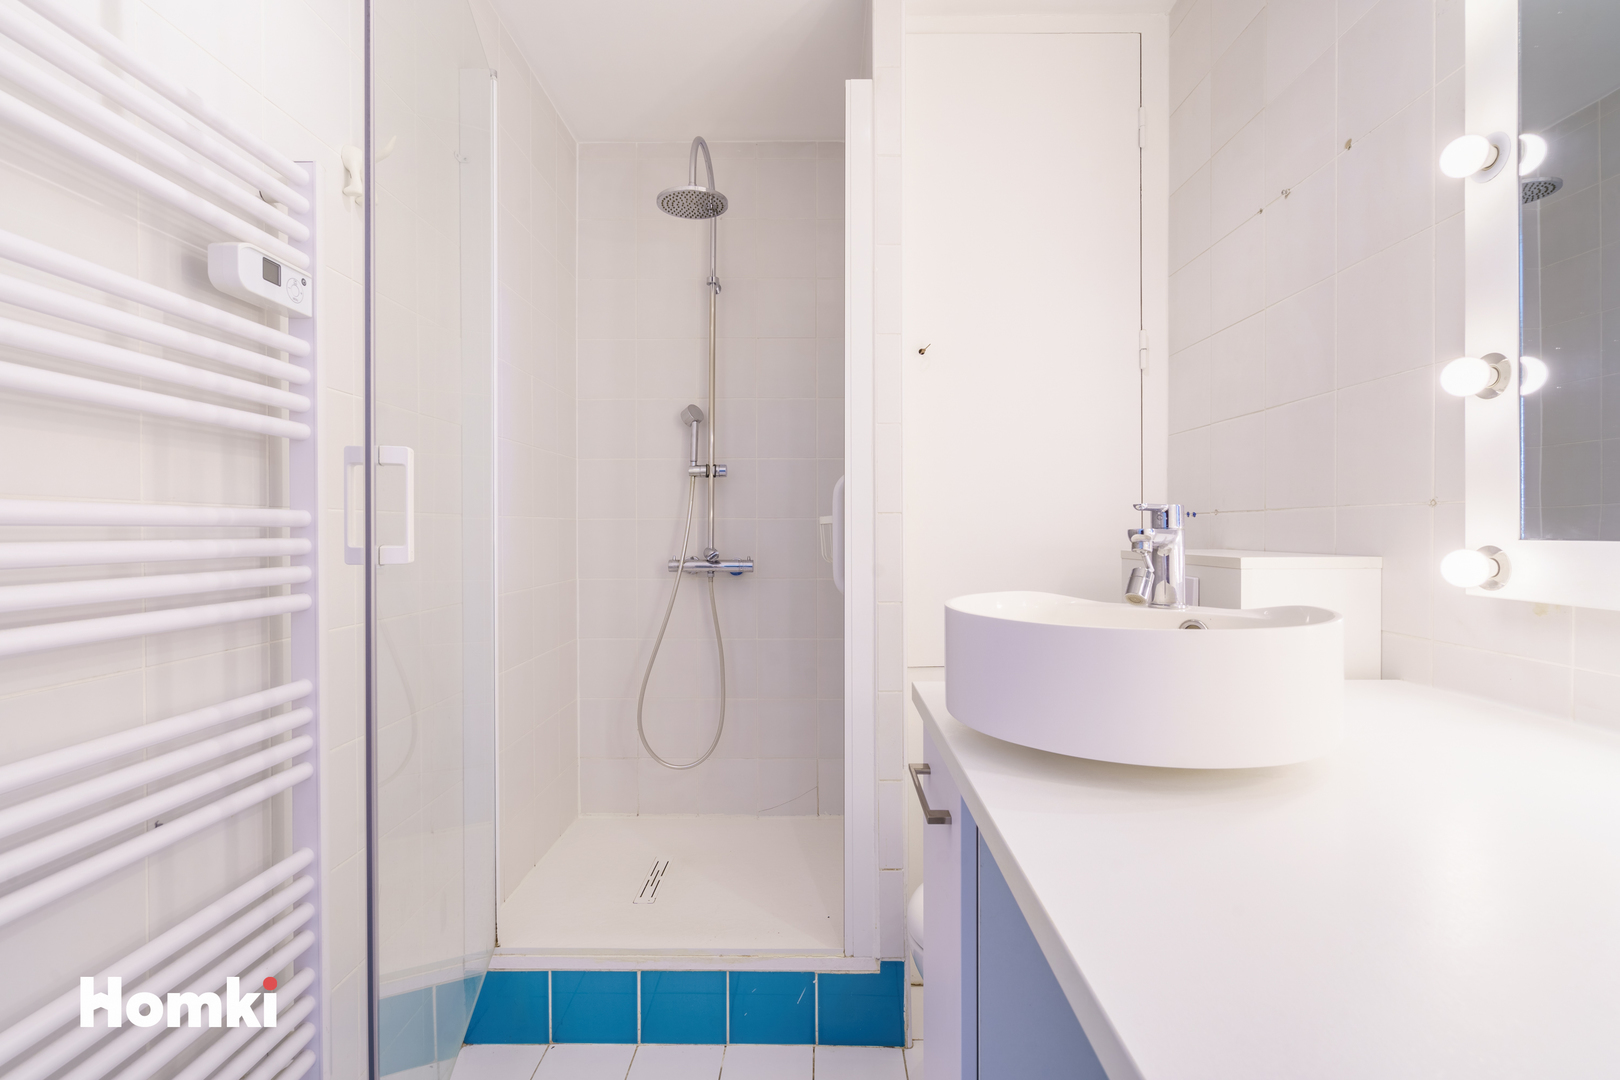 Homki - Vente Appartement  de 39.0 m² à Biarritz 64200